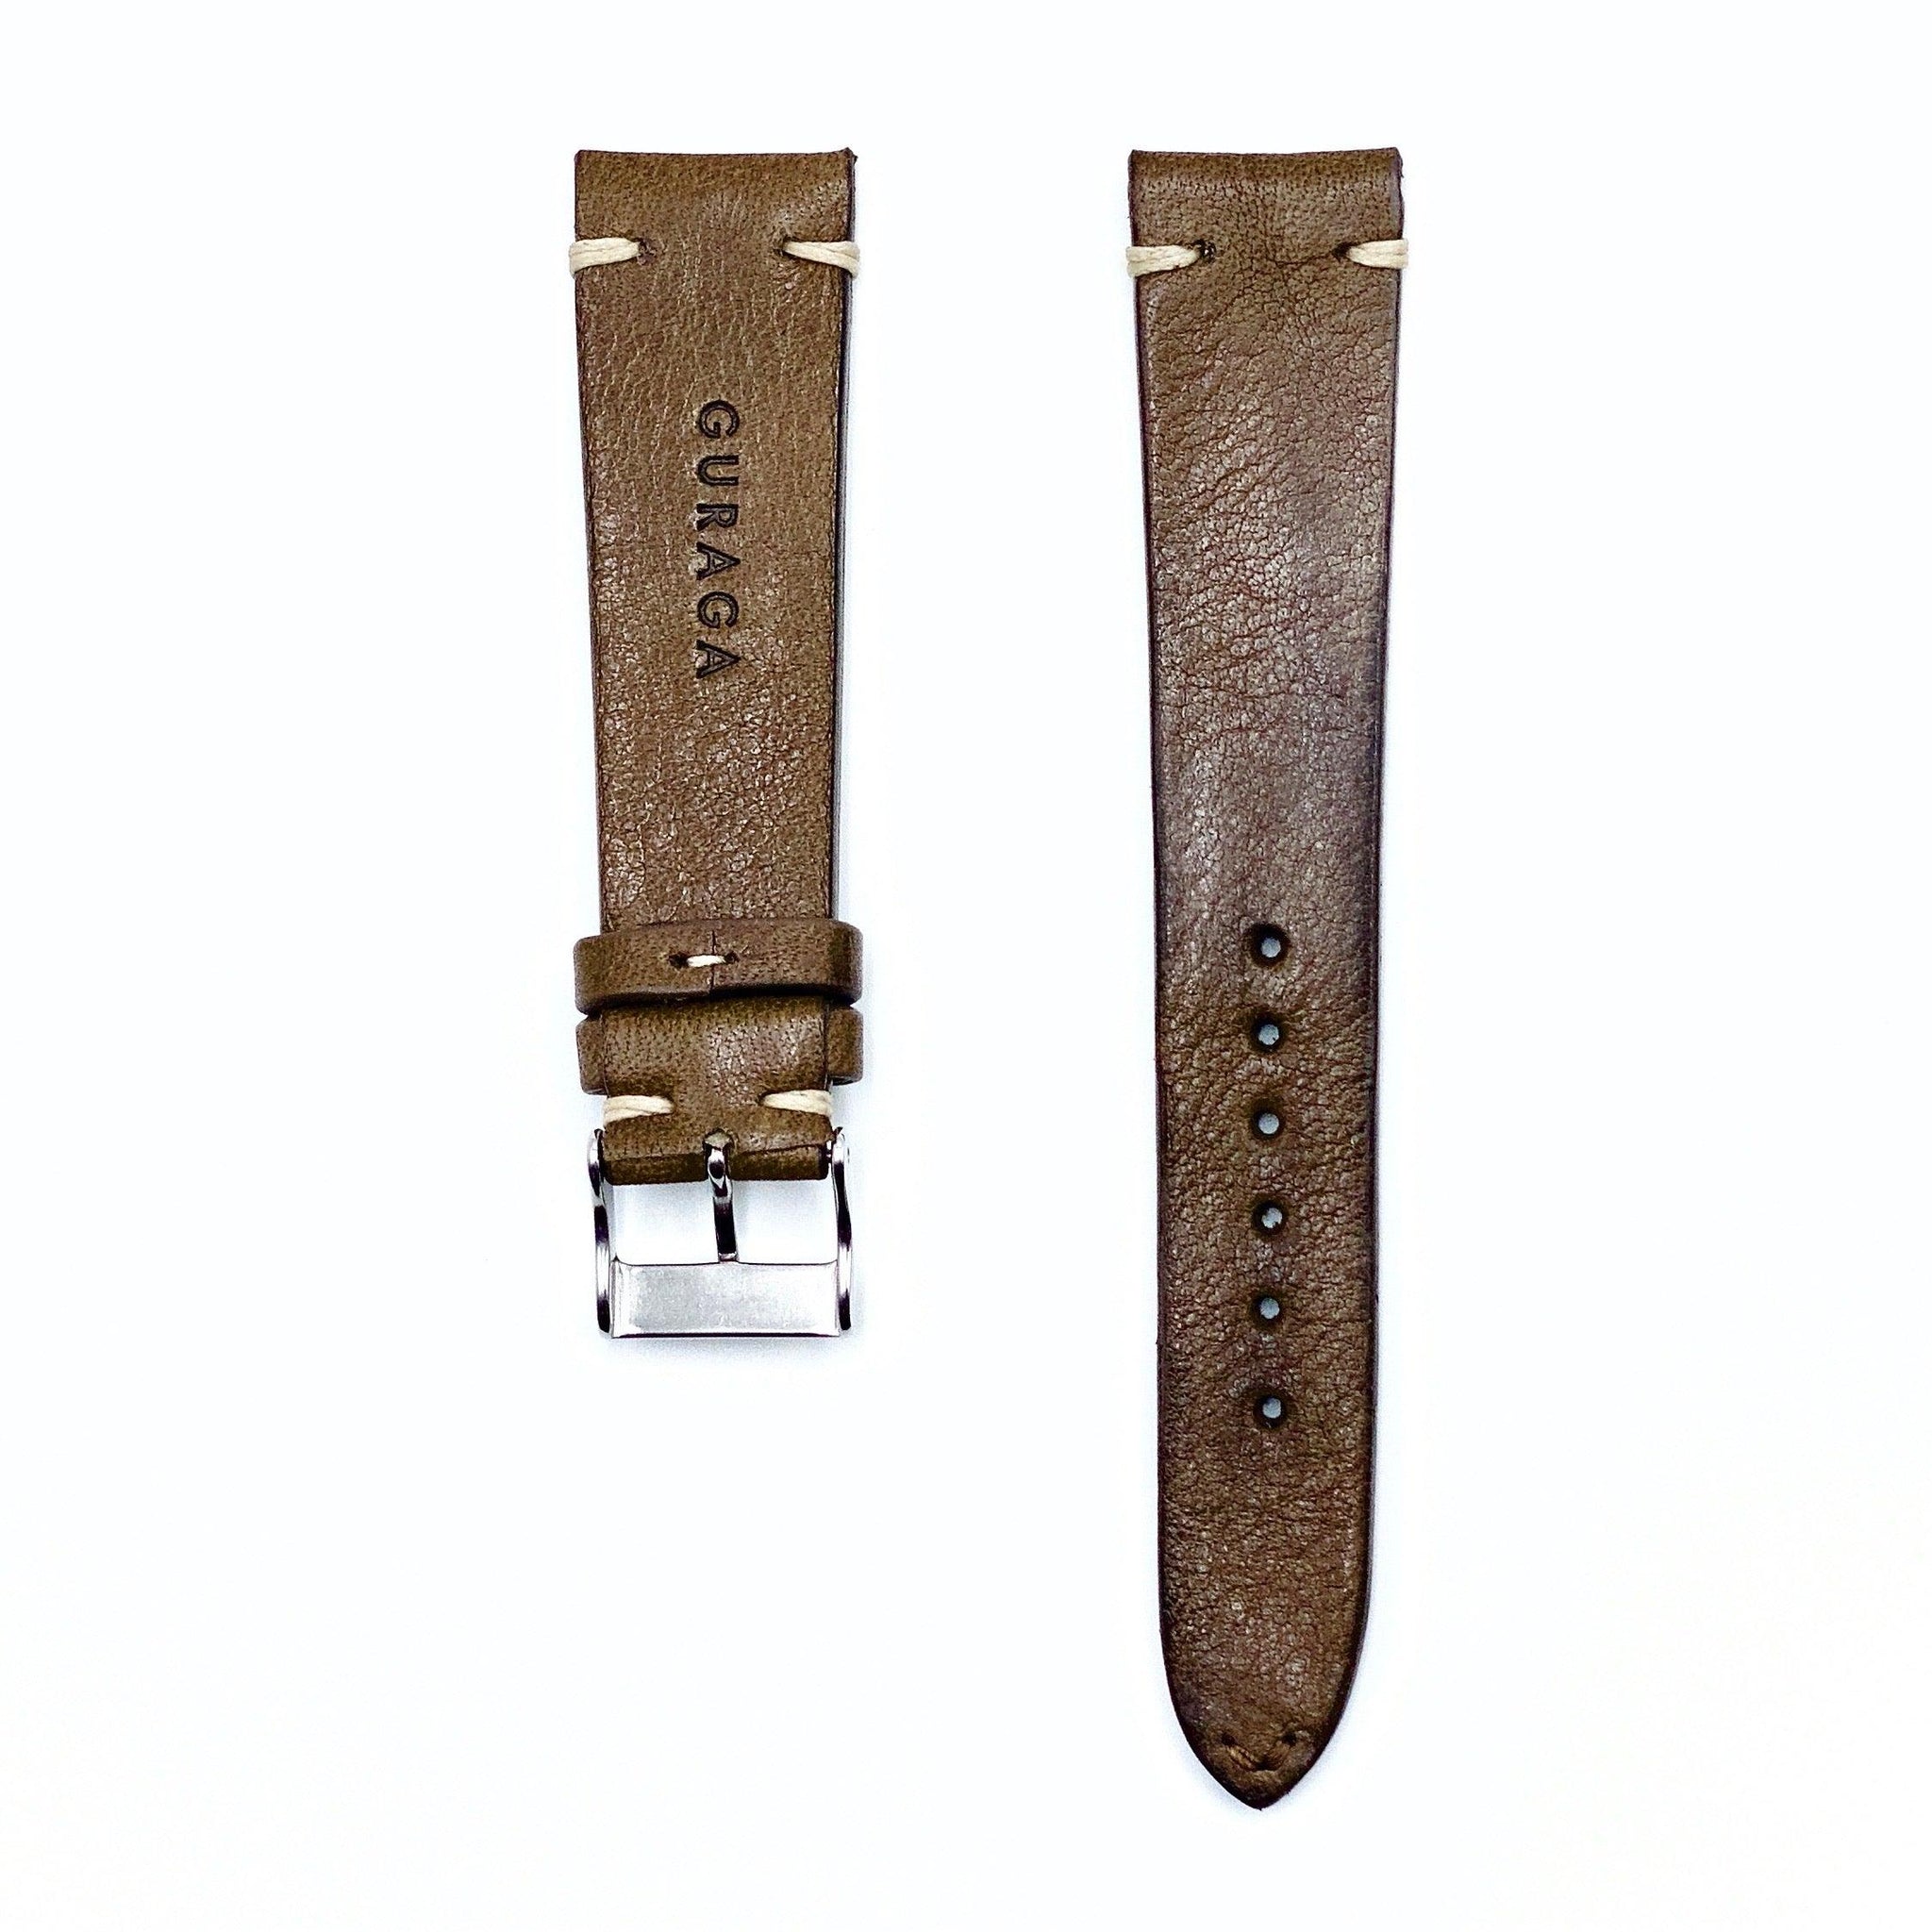 Smoked Grey Leather Vintage Watch Strap - Guraga